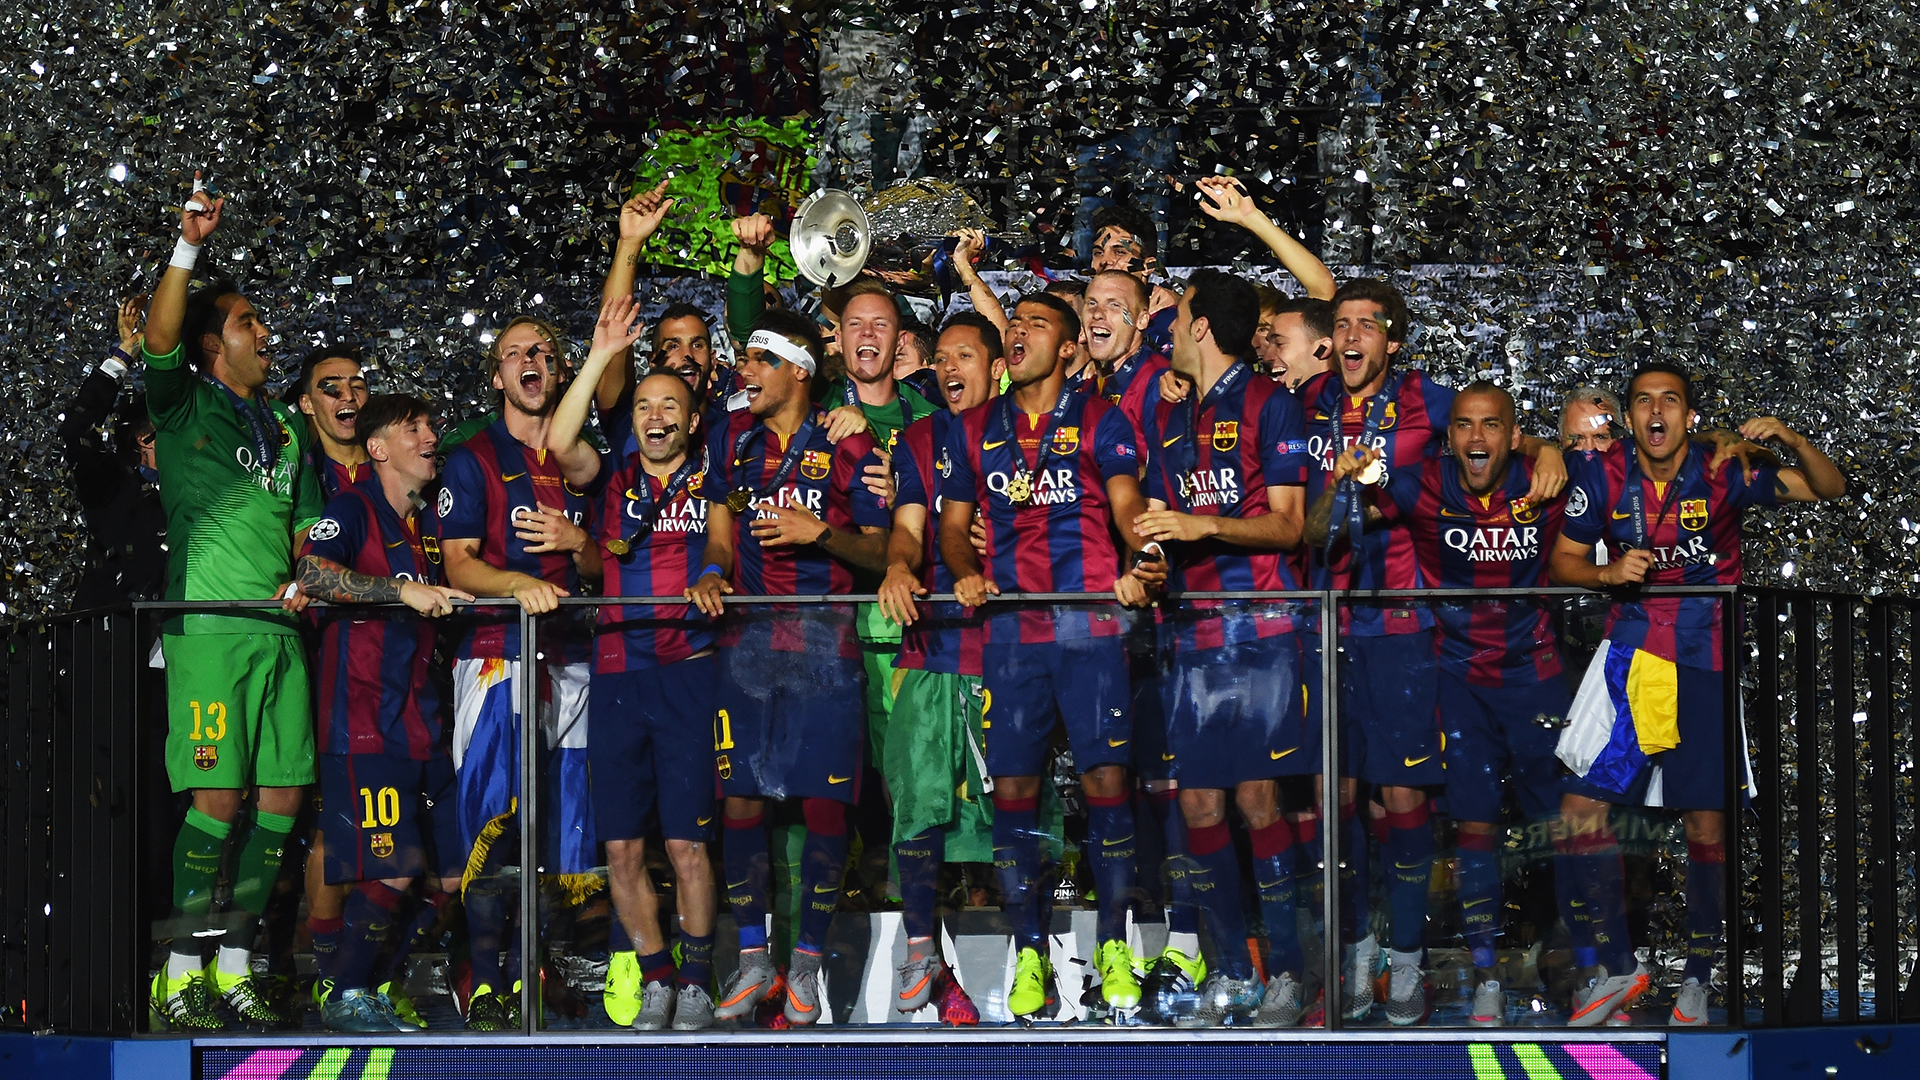 Barcelona 2015 Champions League winners